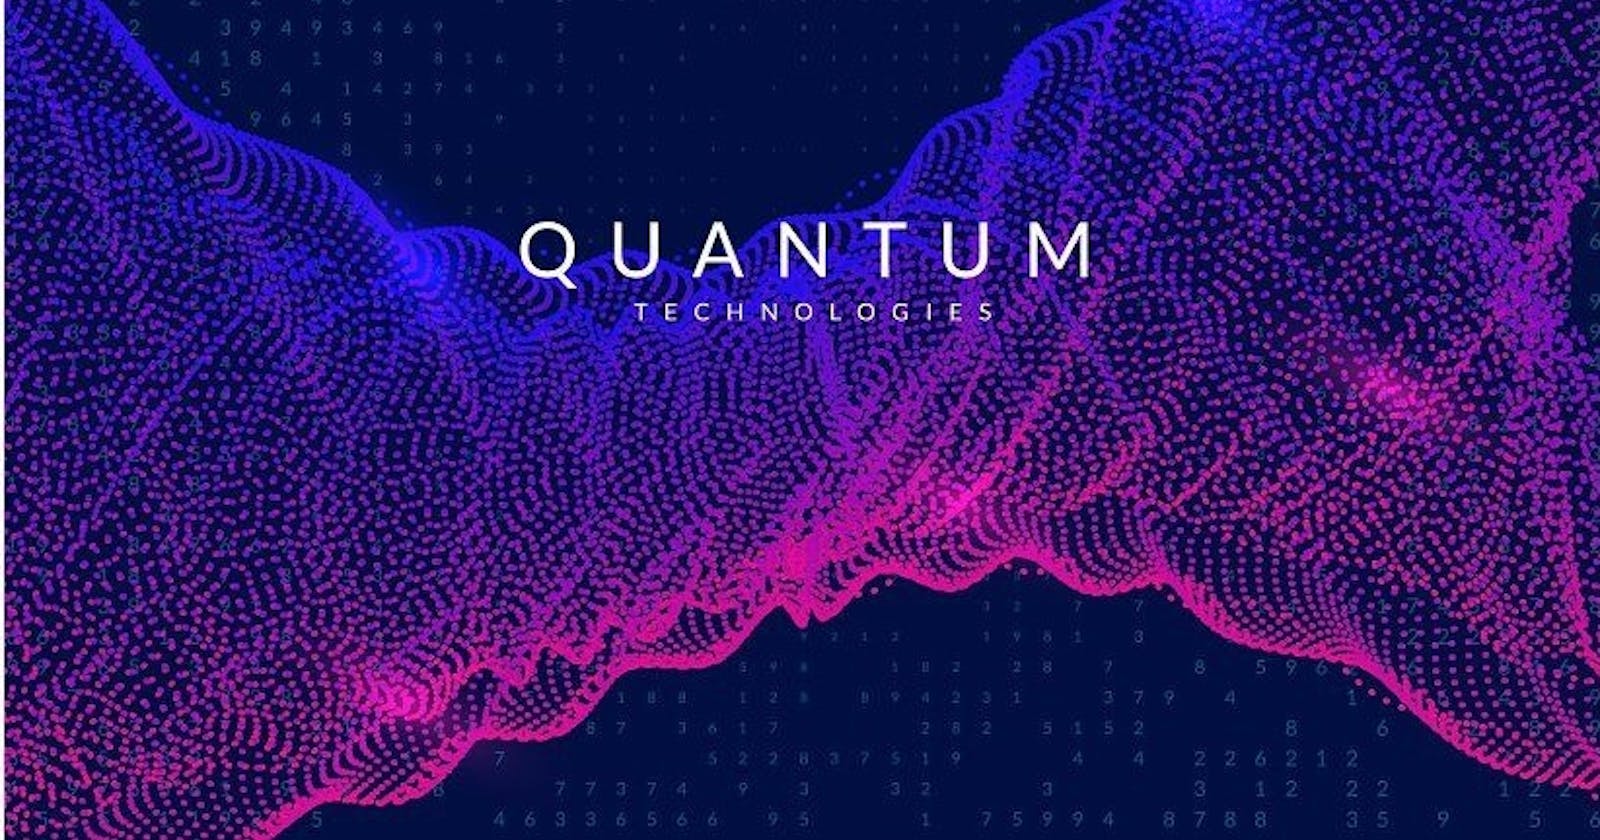 Quantum computing is the next big thing 🤔